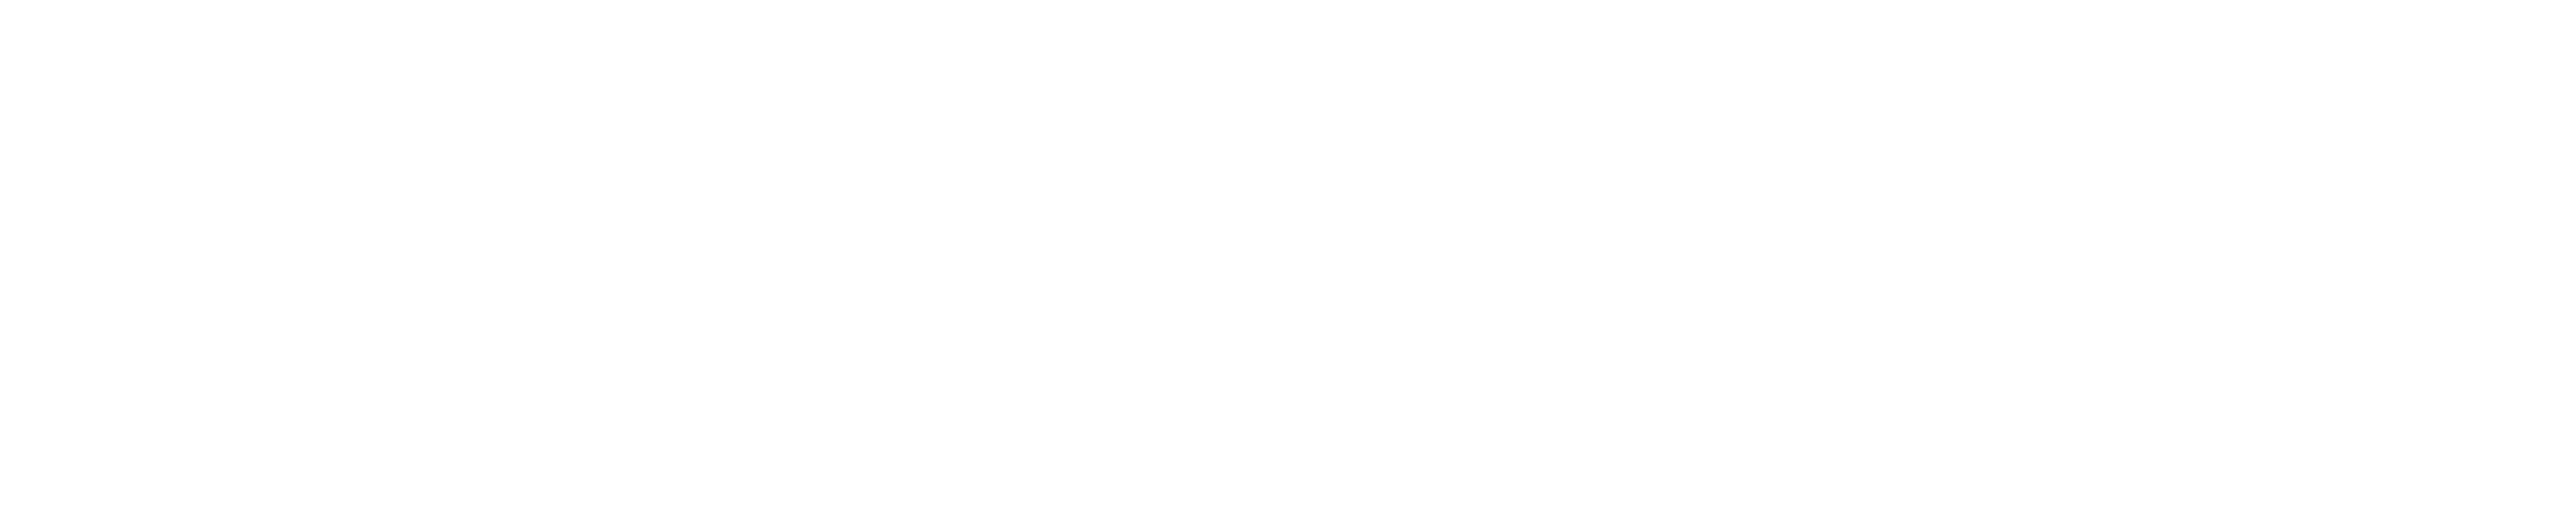 Transadis logo